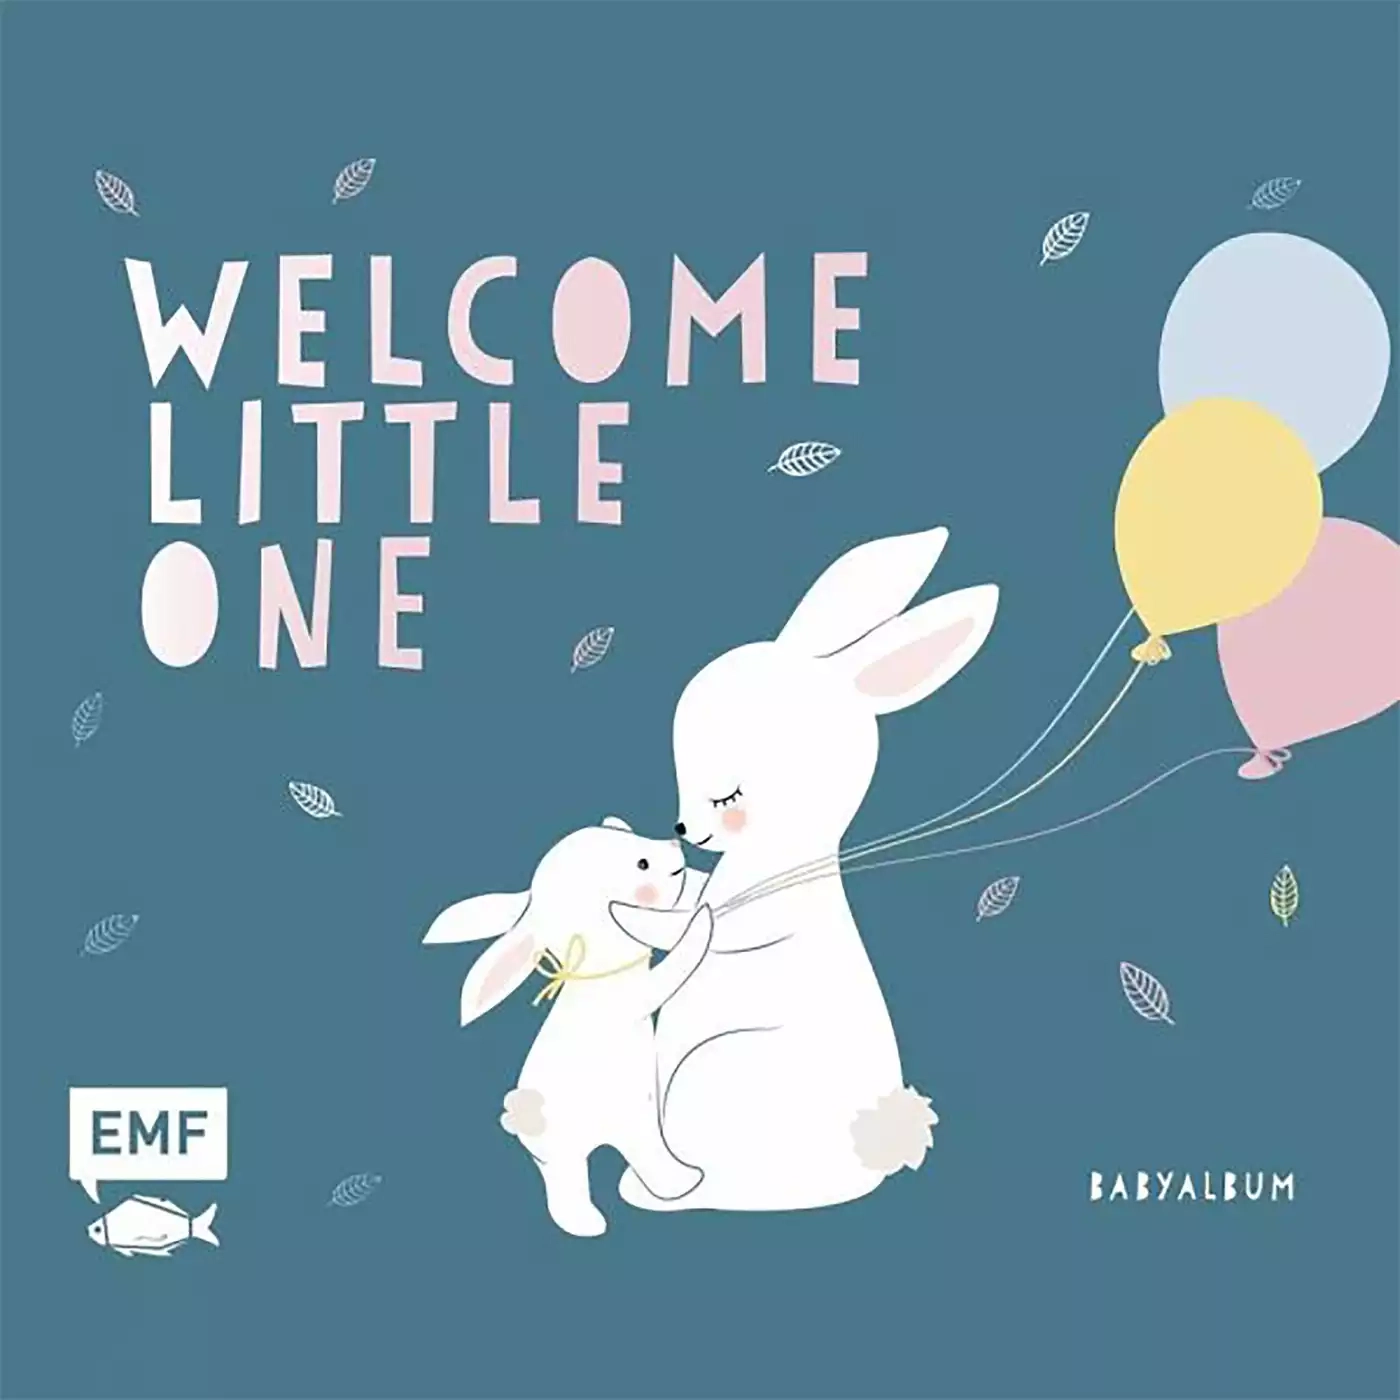 Babyalbum Welcome little one EMF 2000577521401 3